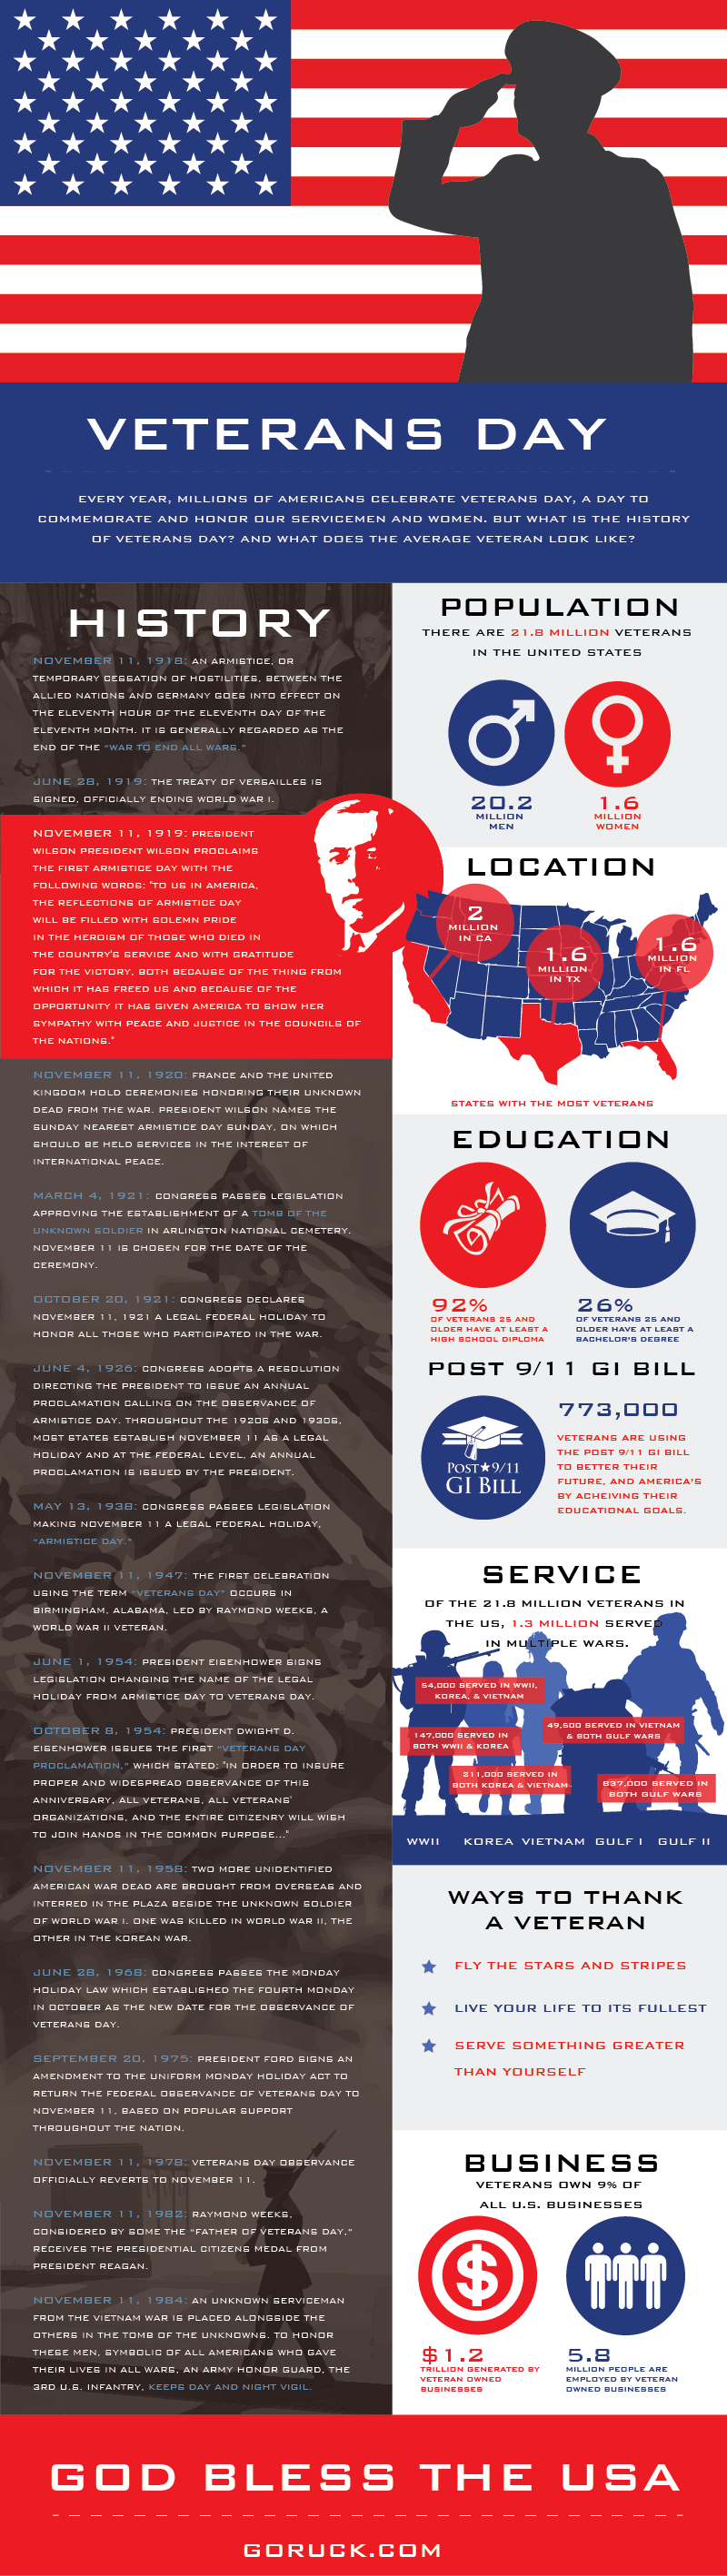 Veterans-Day-Infographic